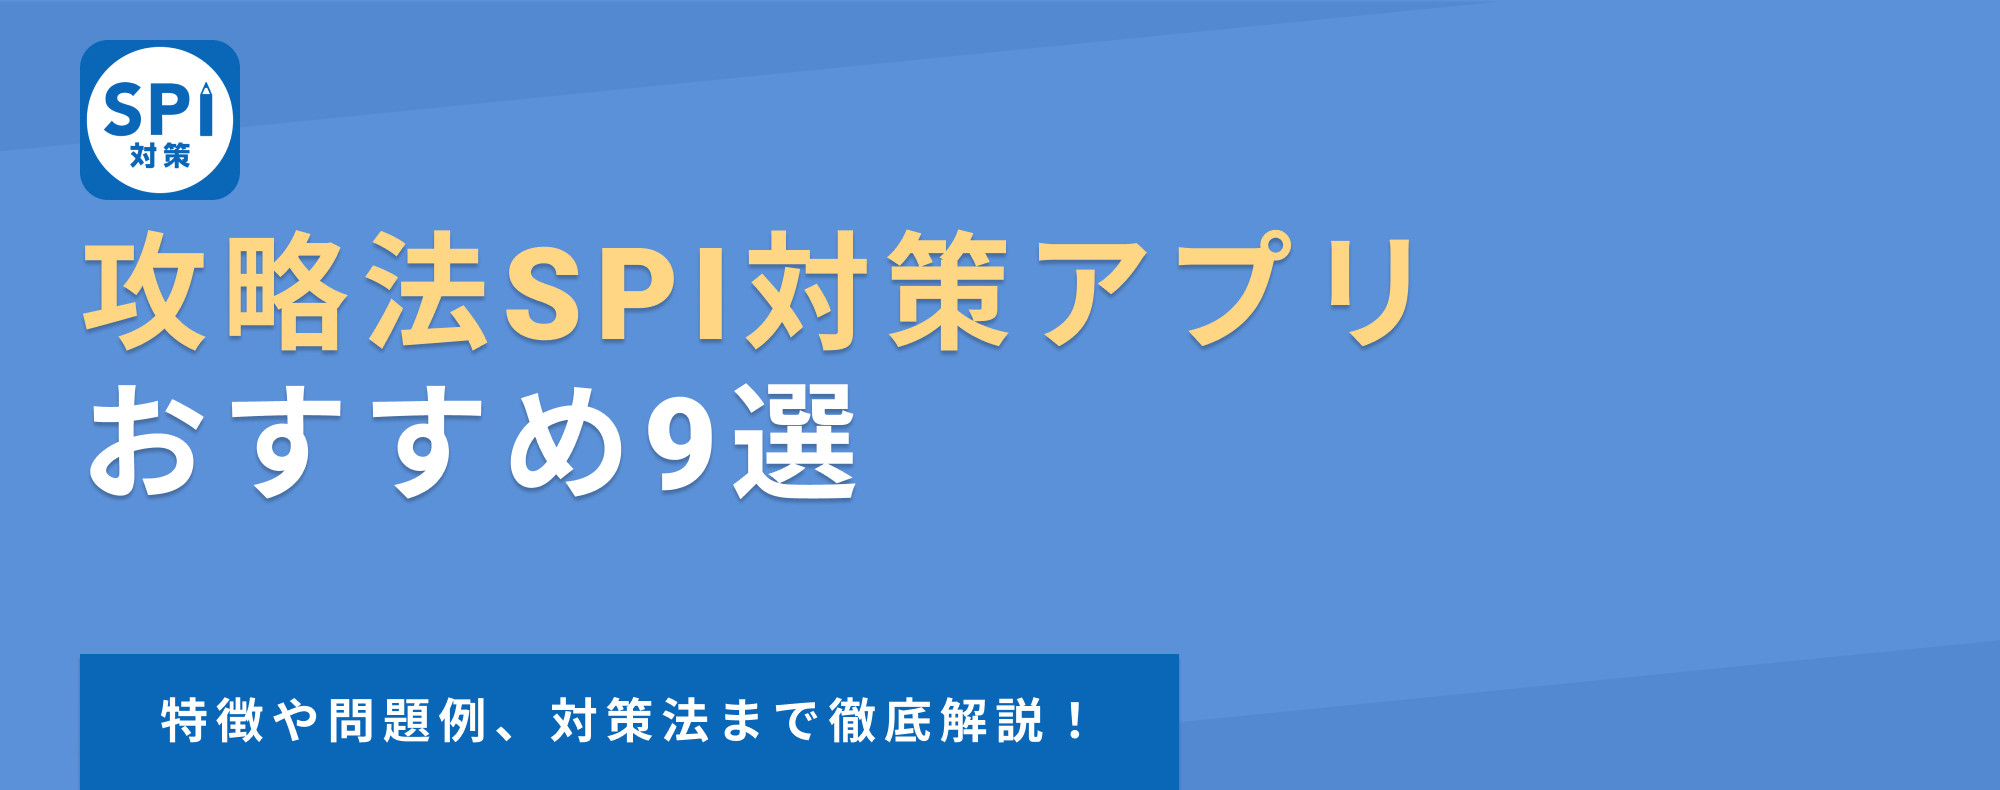 【SPI対策アプリ】言語・非言語対策におすすめの無料・有料アプリ